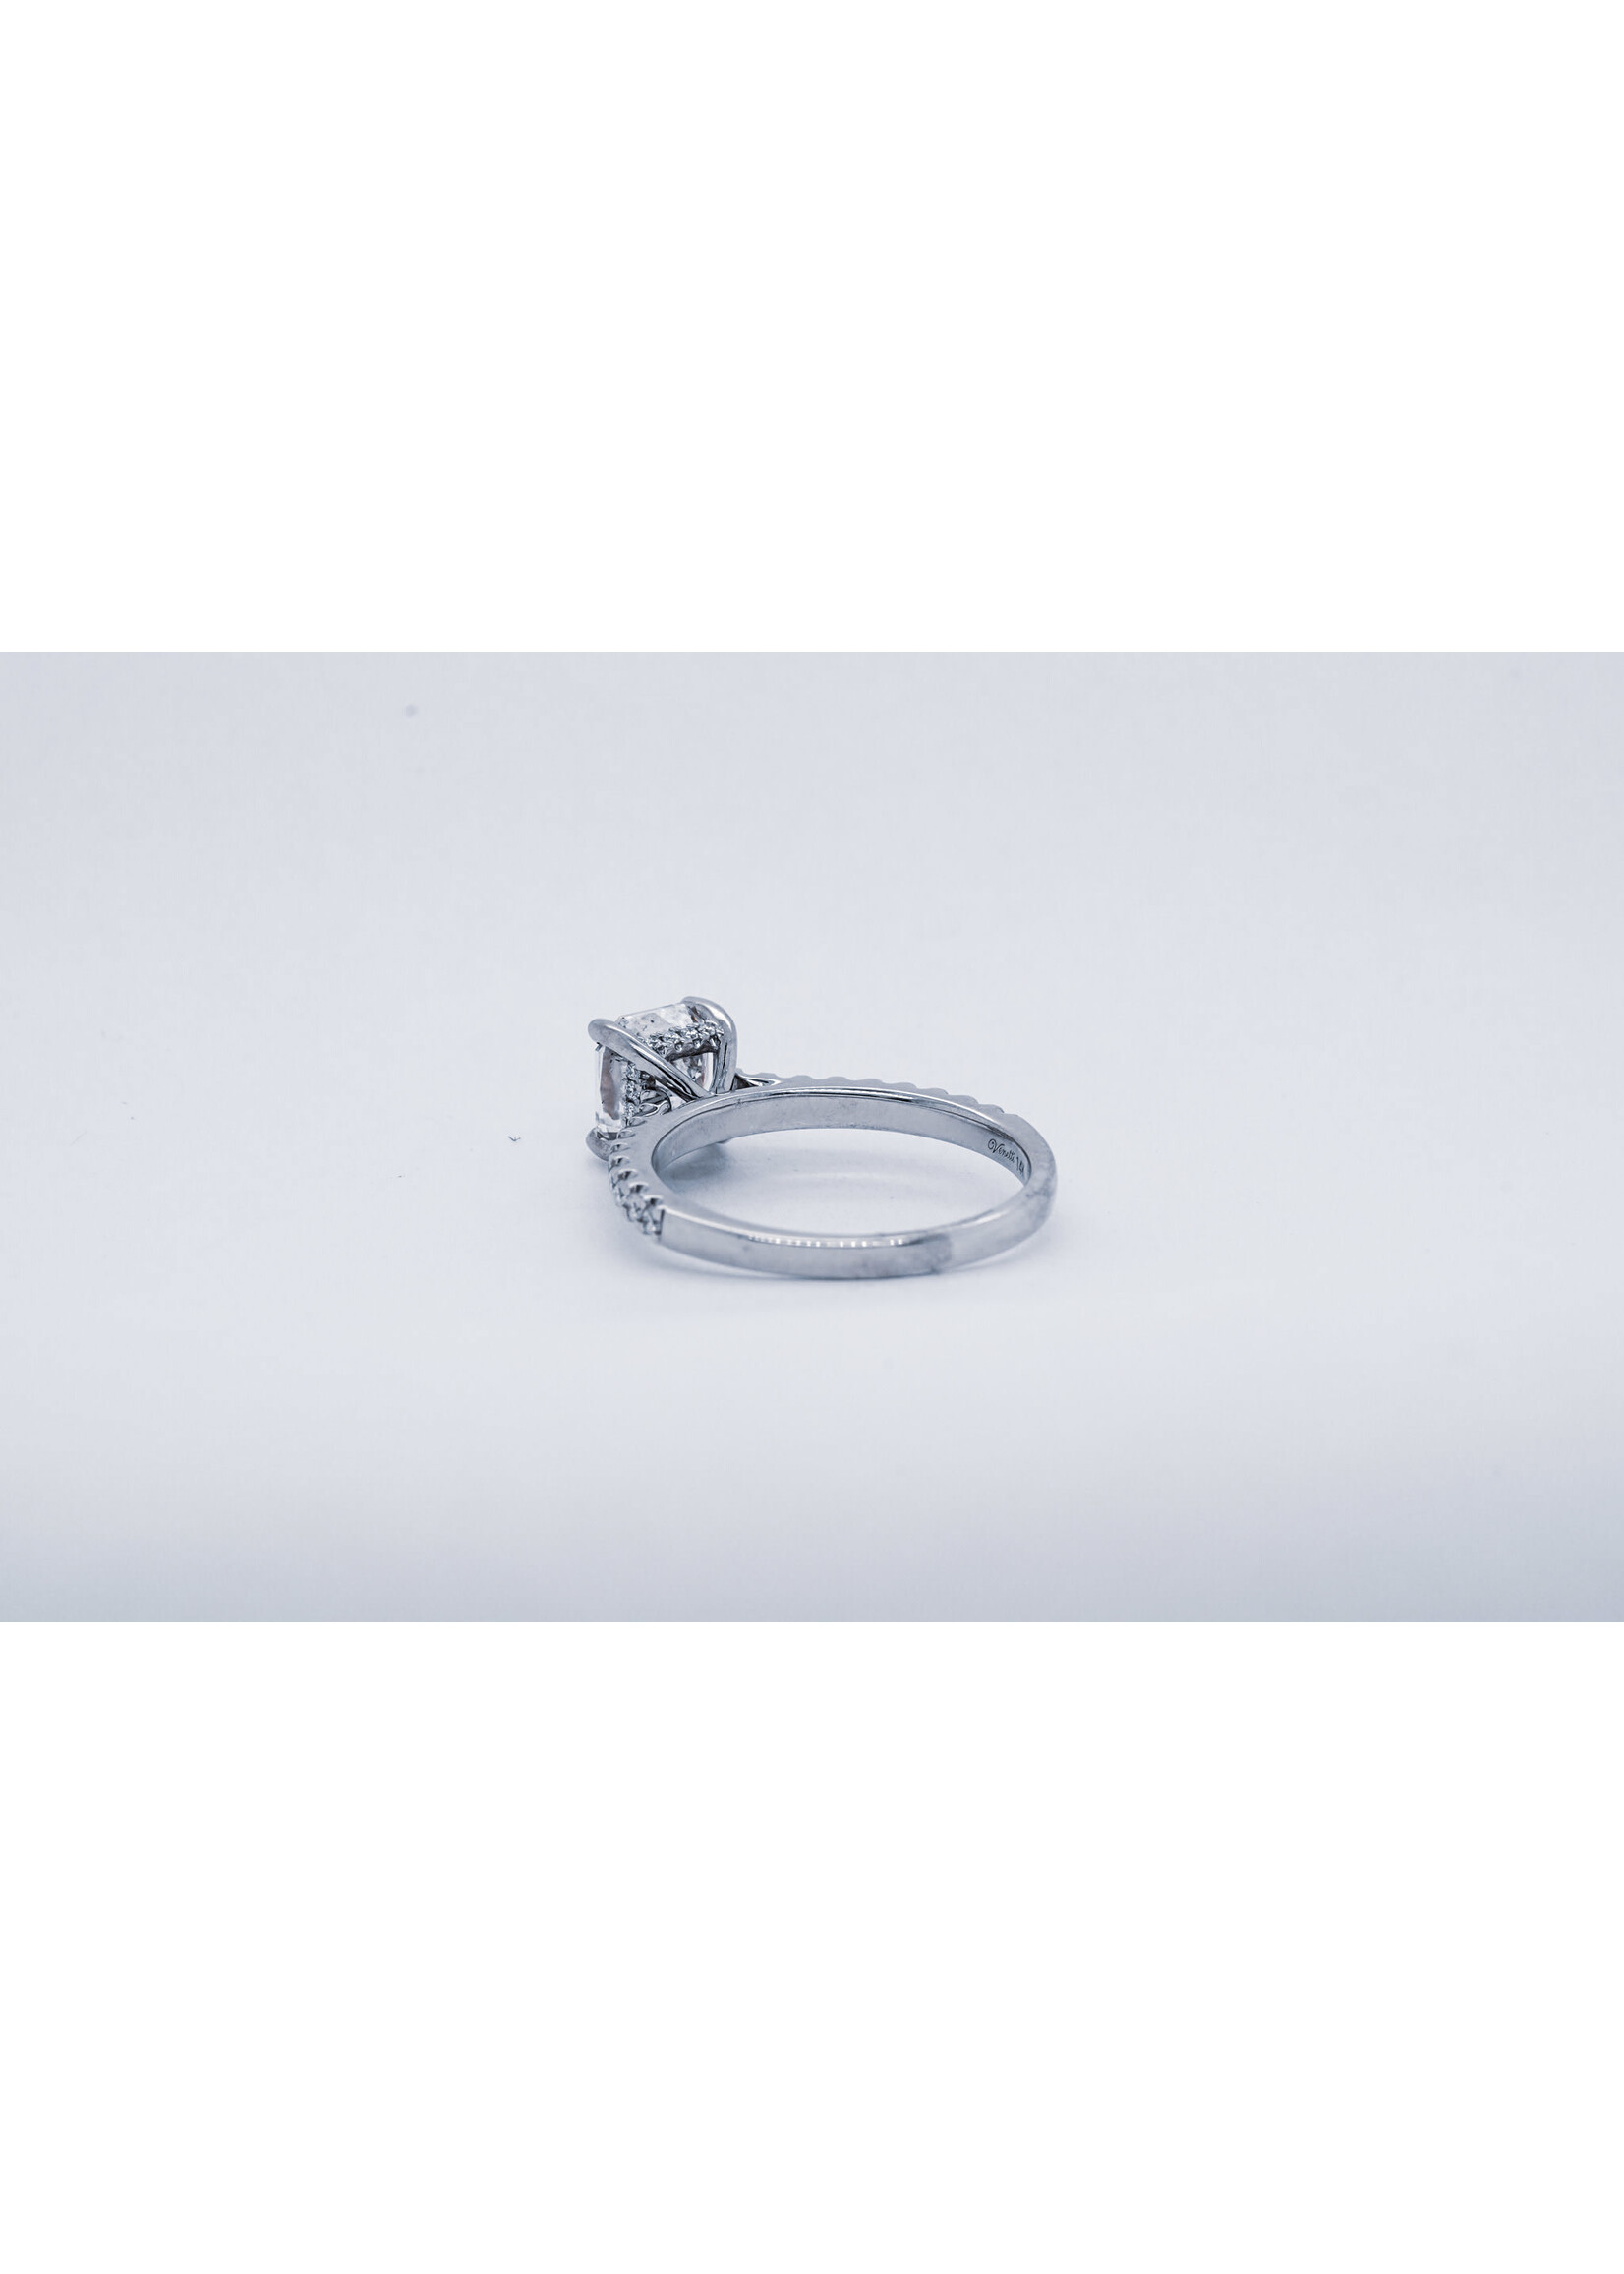 14KW 2.96g Venetti 1.81ctw (1.51ctr) Diamond Hidden Halo Engagement Ring (size 6.5)